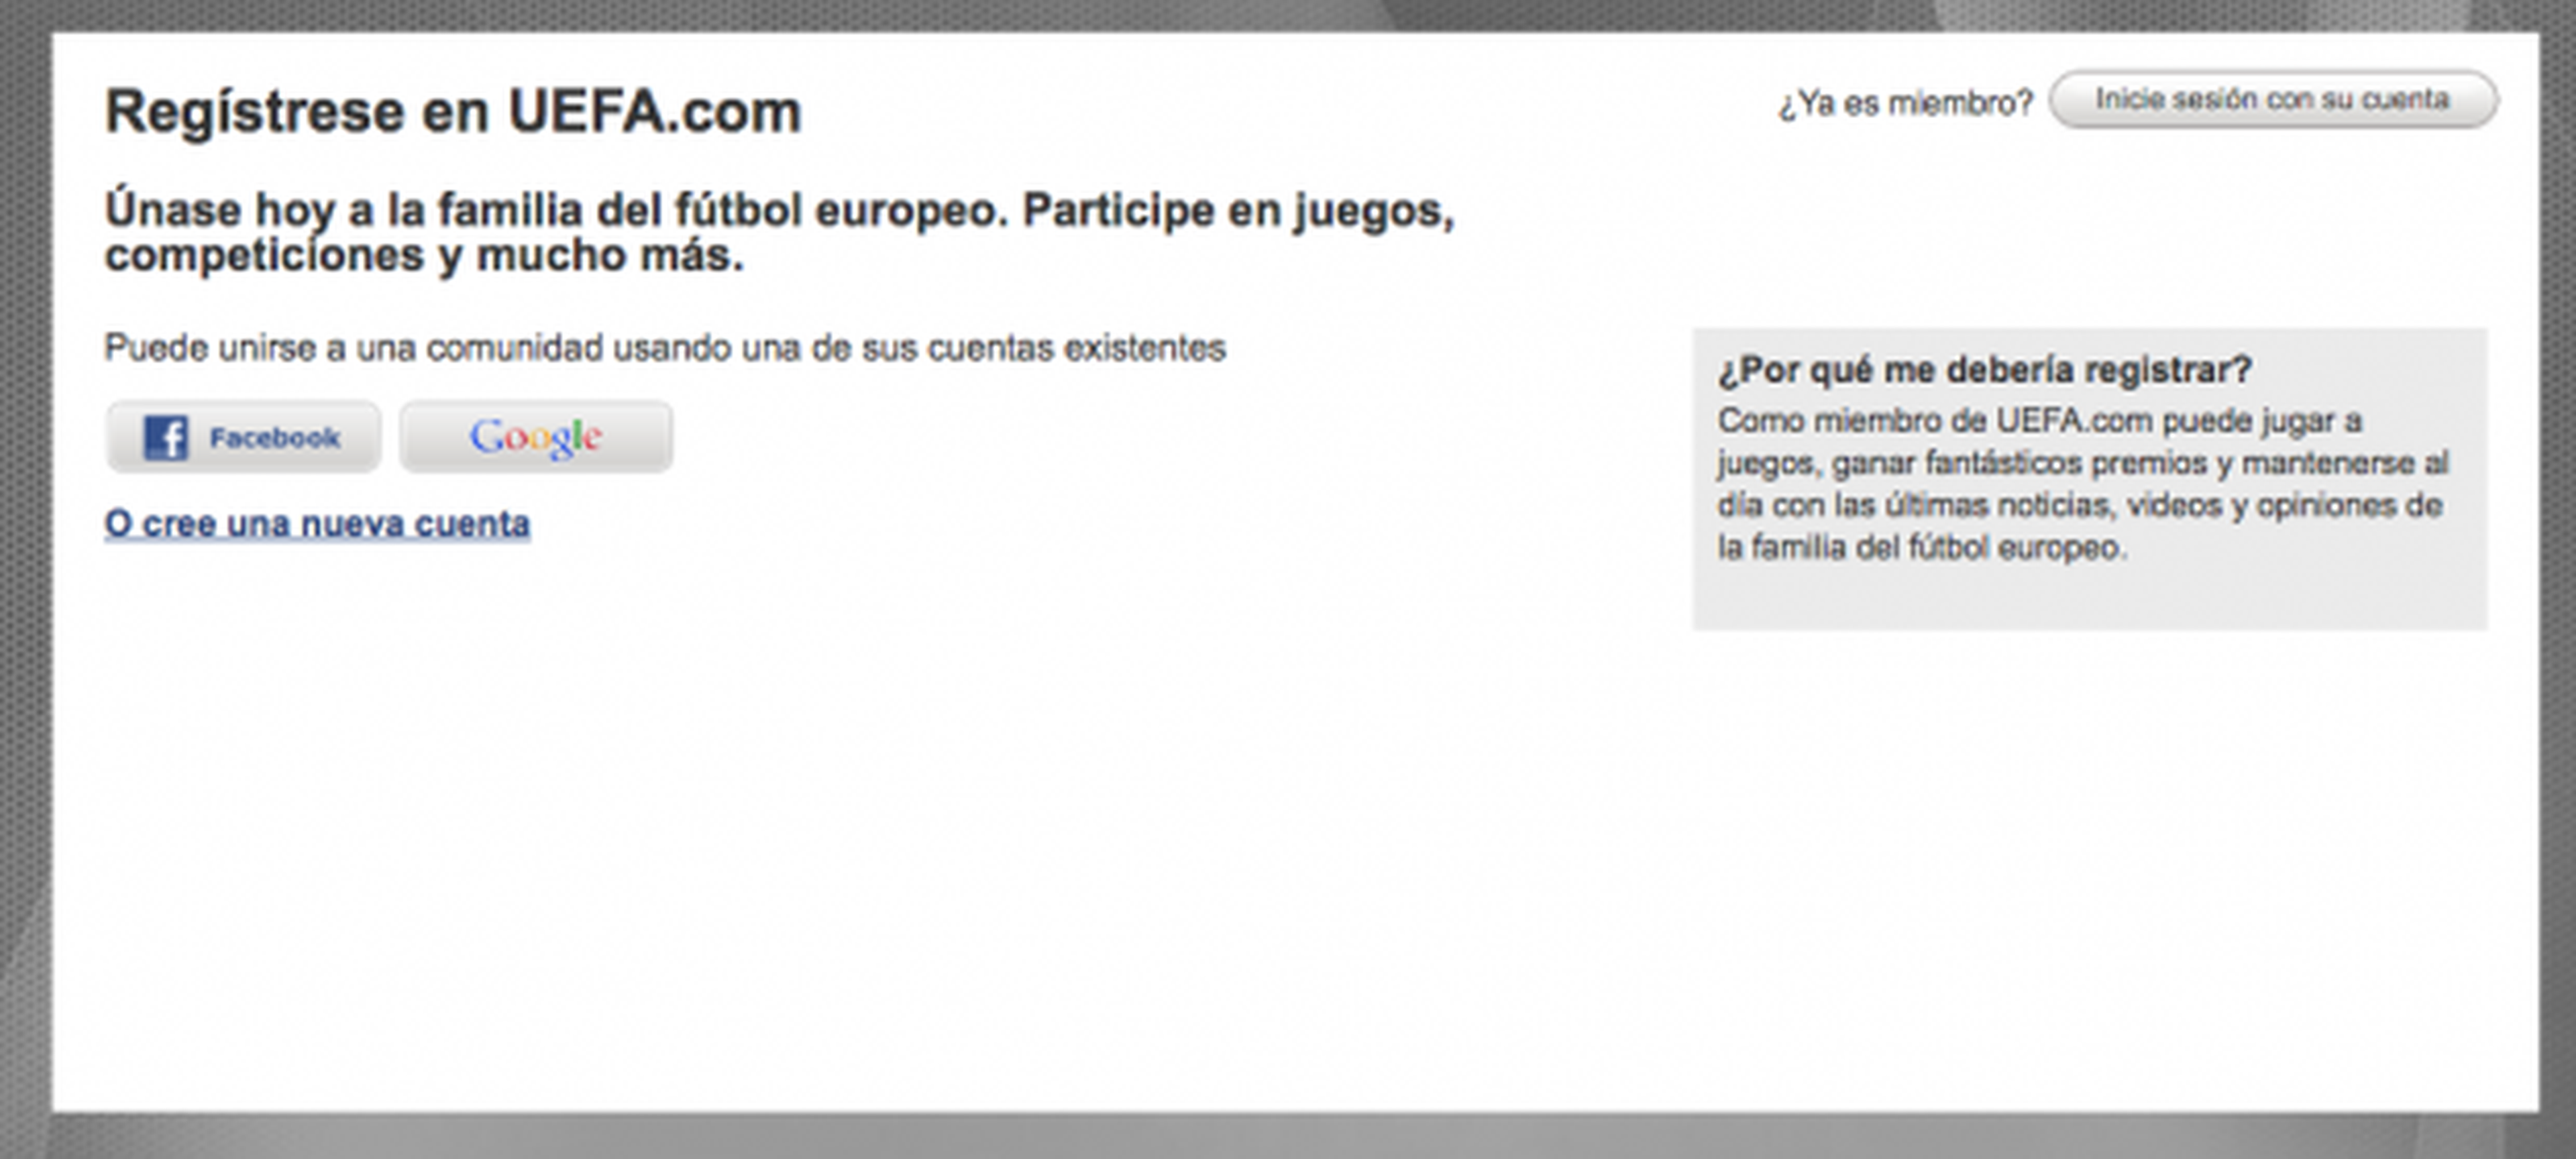 portugal hungria eurocopa online por internet gratis